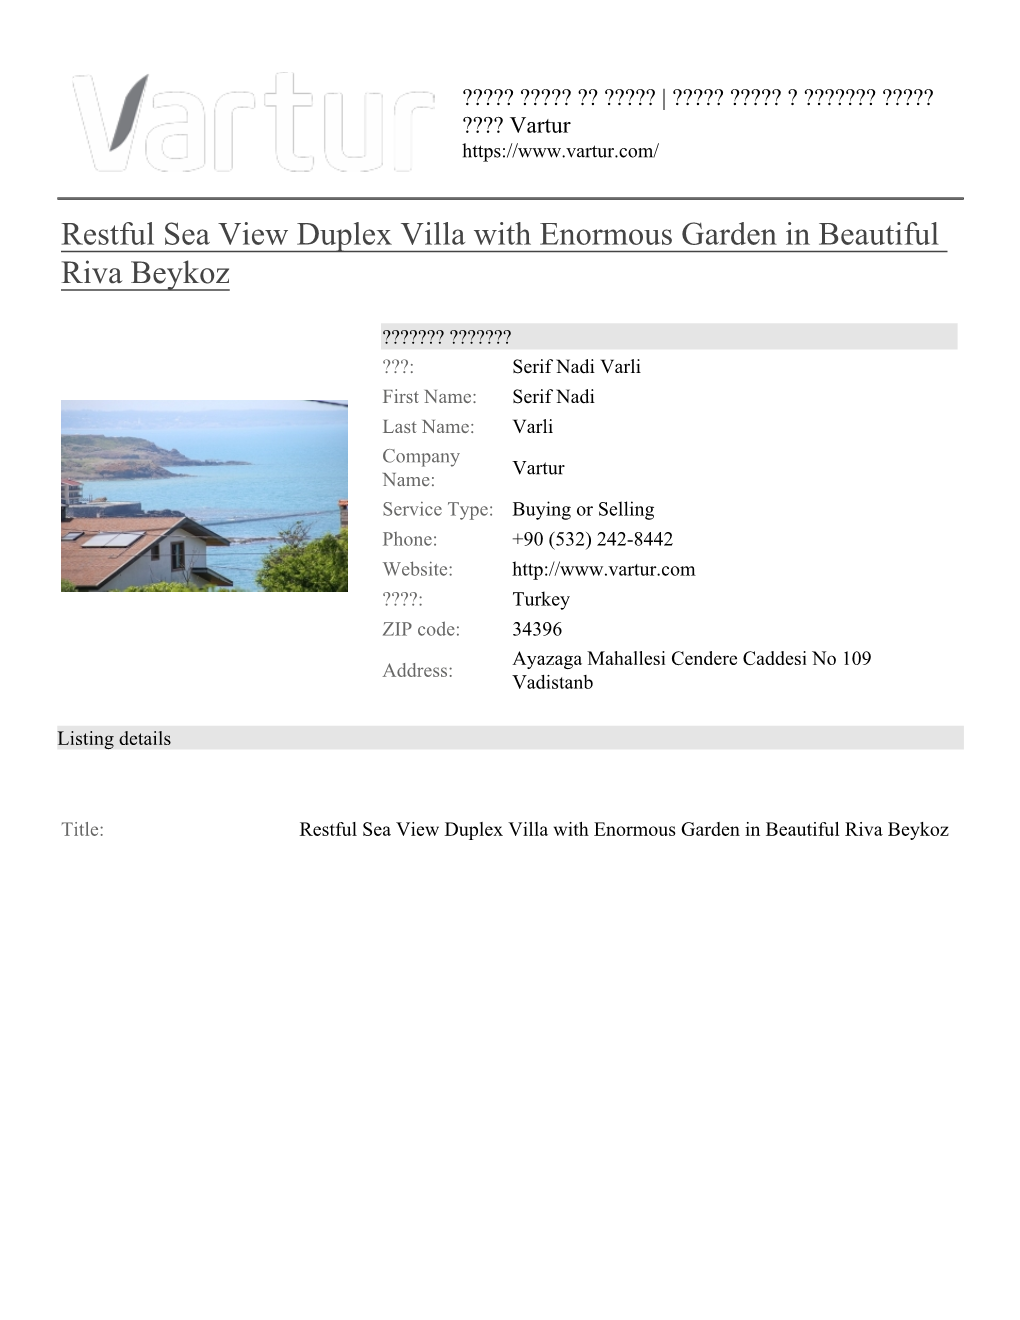 Restful Sea View Duplex Villa with Enormous Garden in Beautiful Riva Beykoz